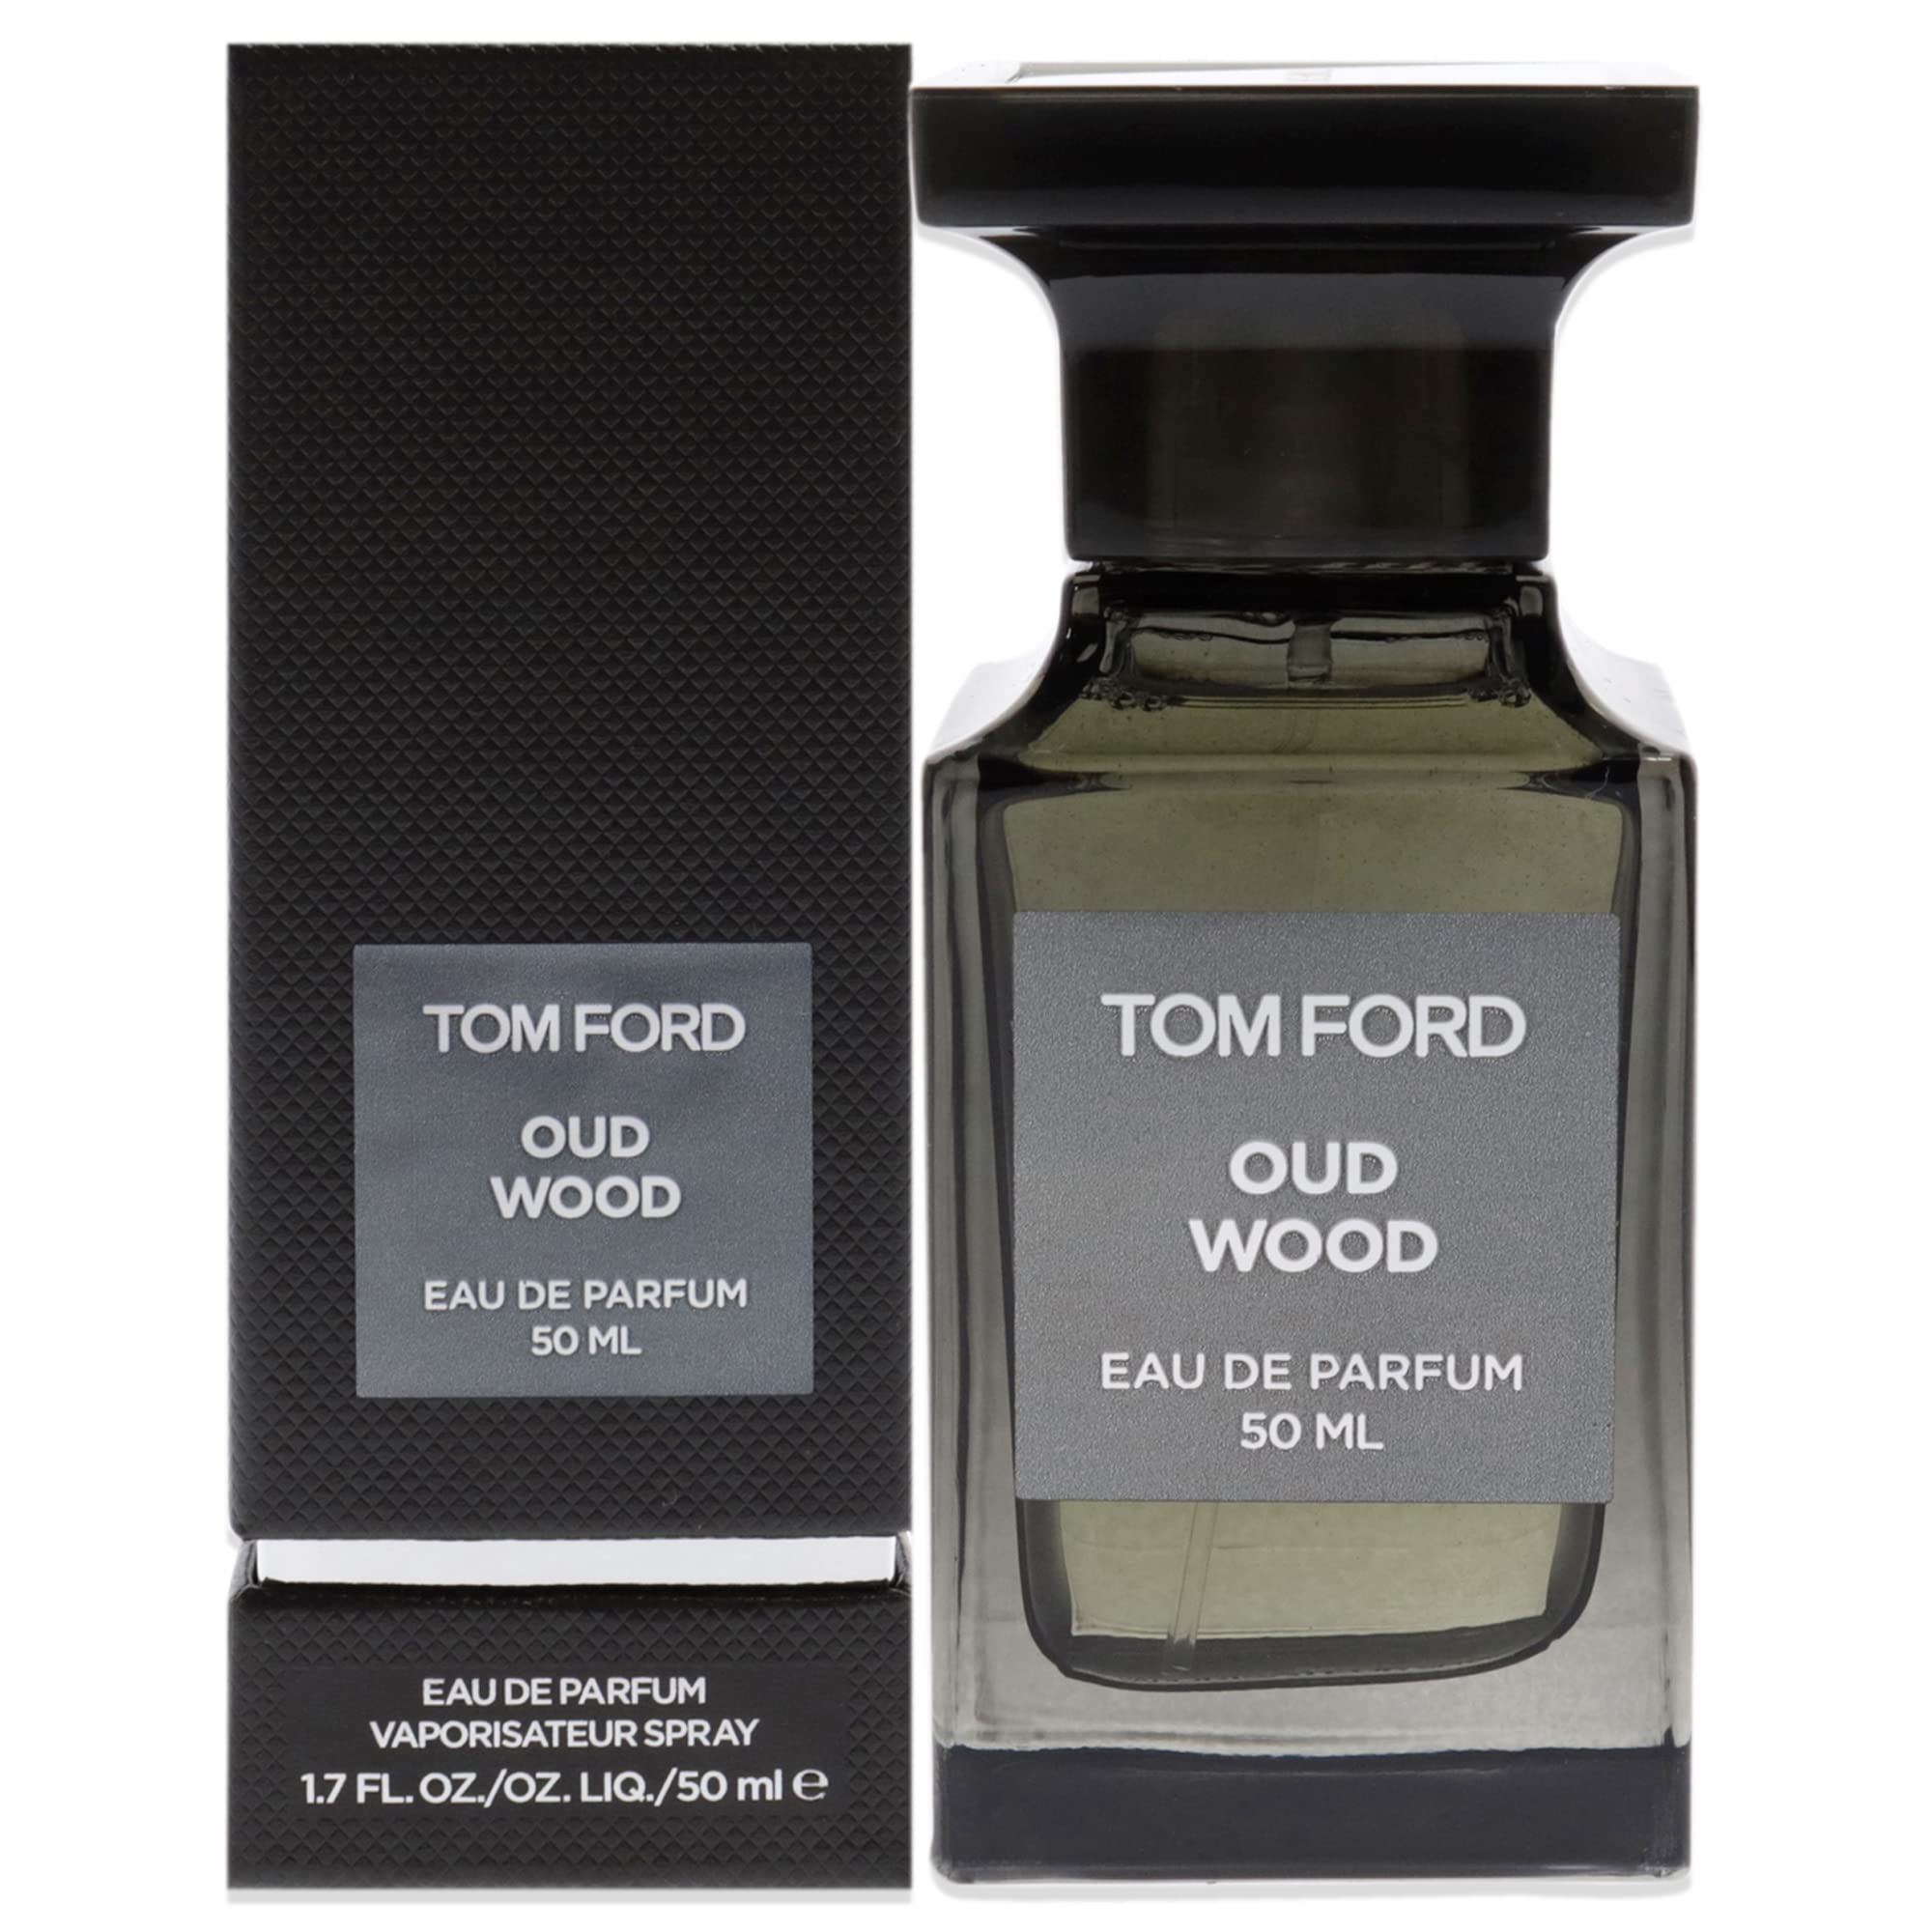 Arriba 71+ imagen tom ford beauty oud wood eau de parfum